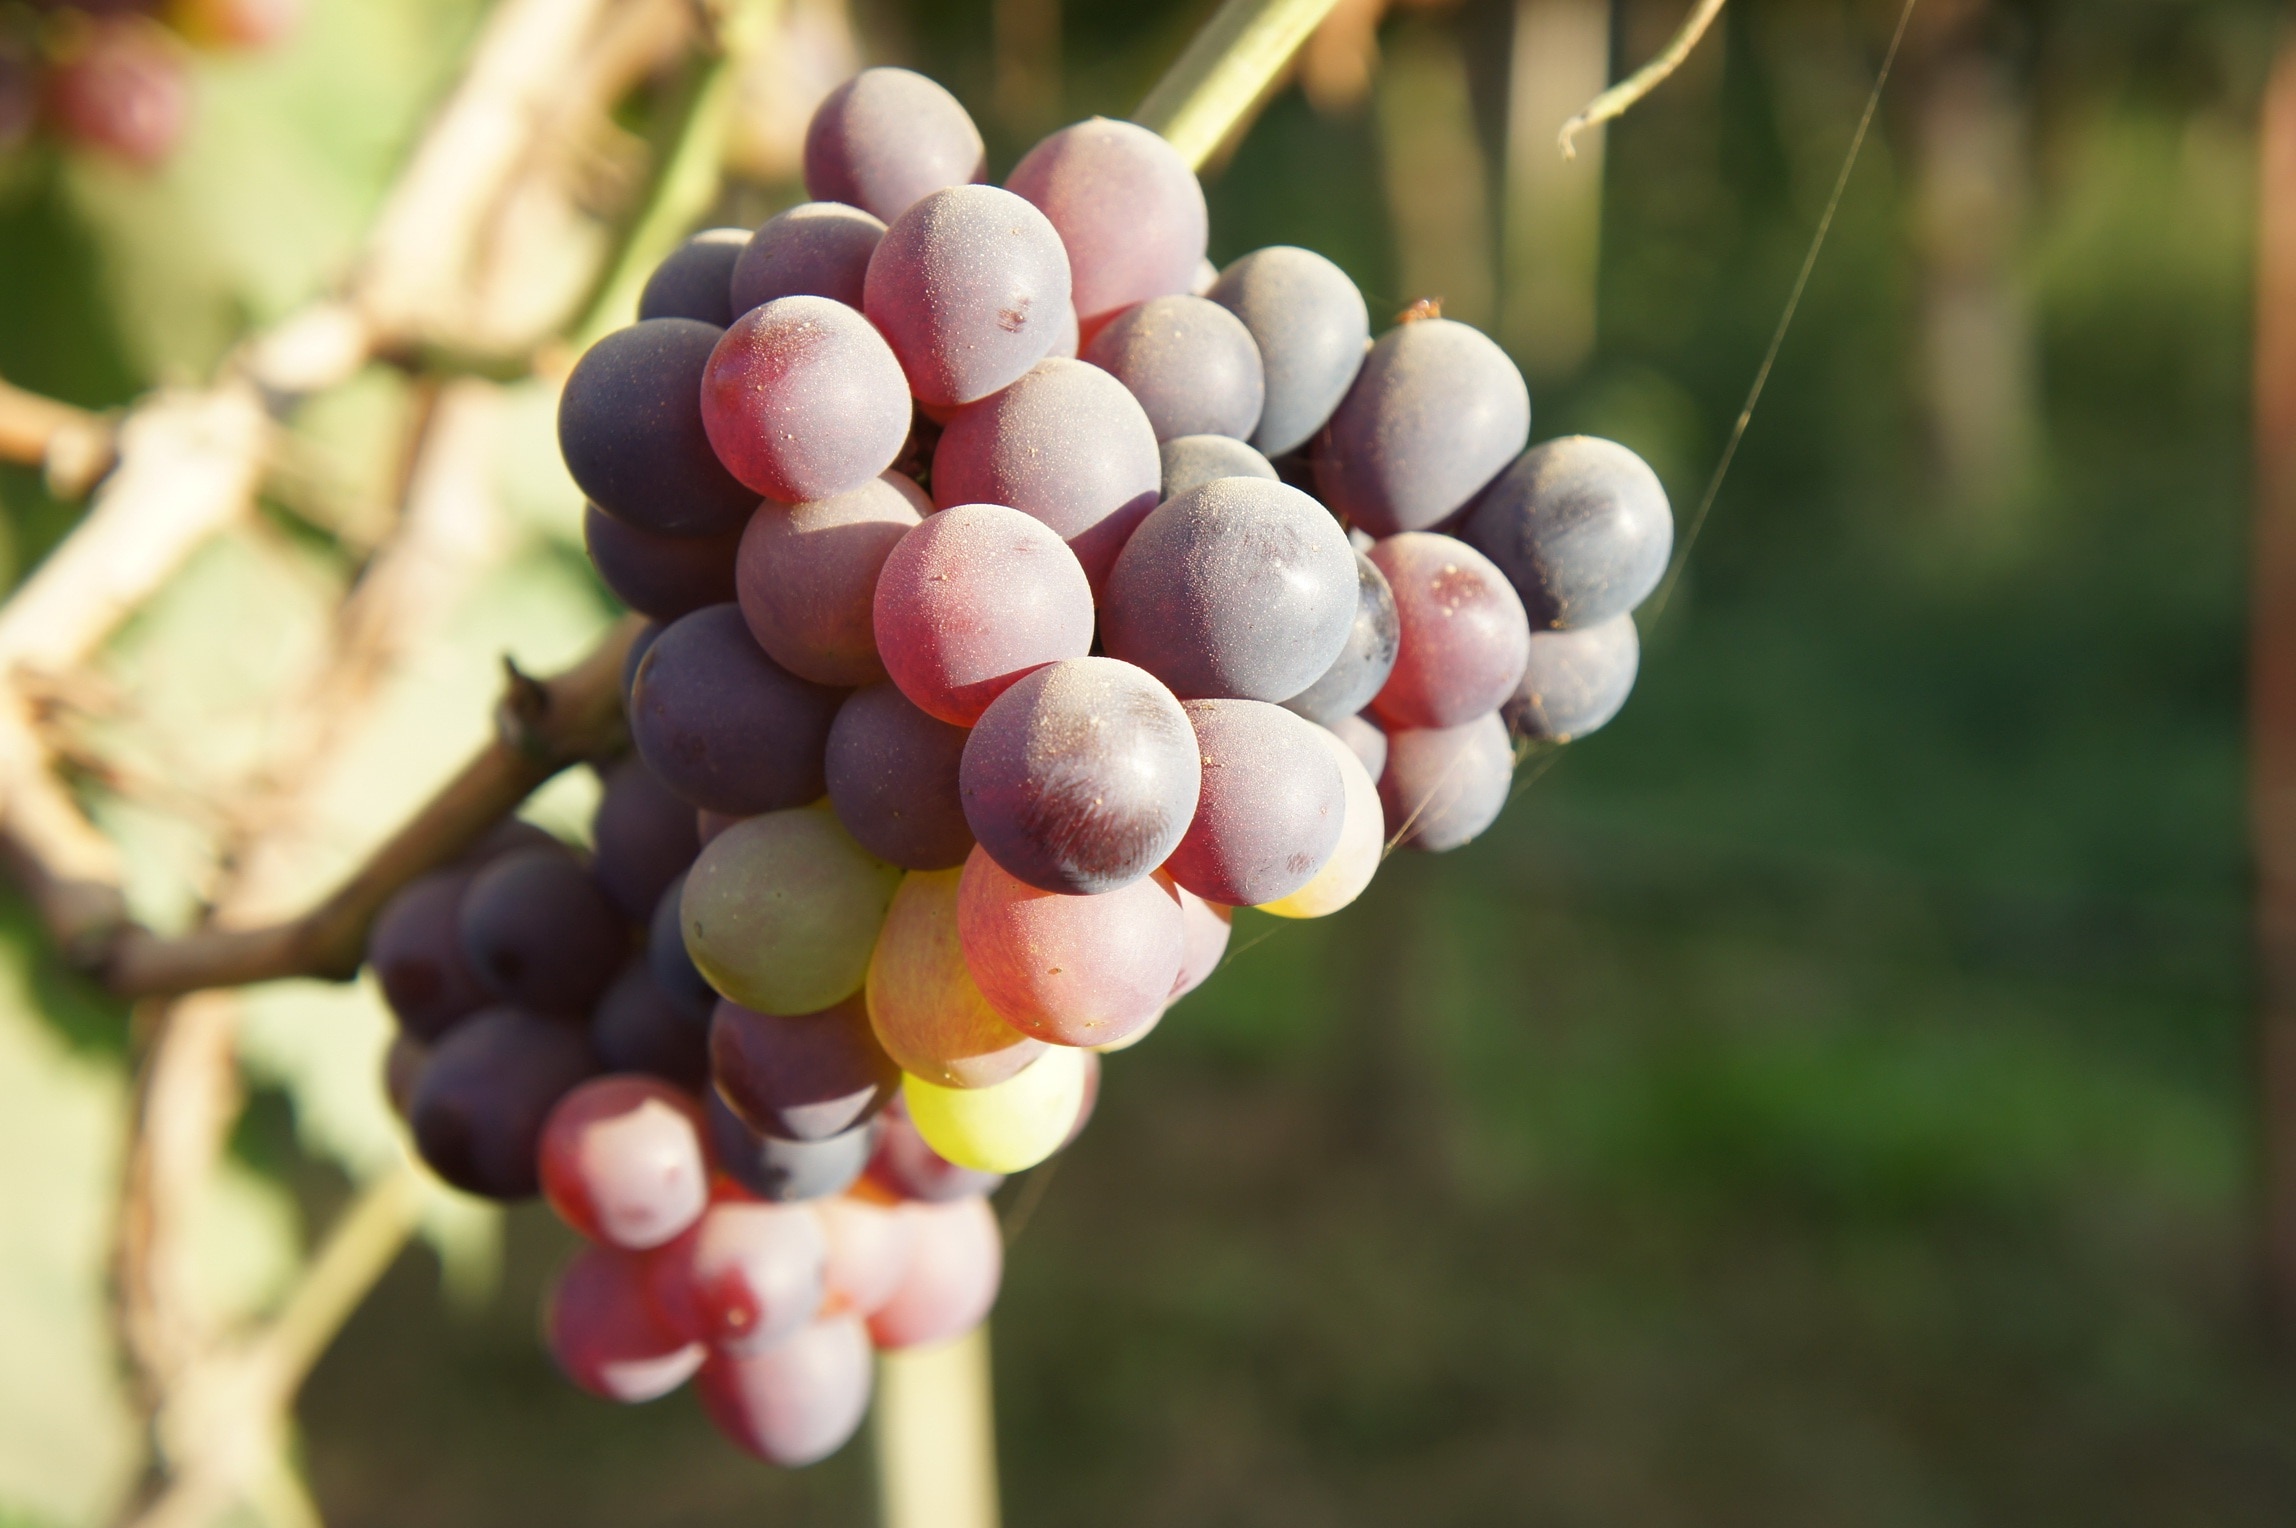 Vine, Fruit, Grapes, Blue, Plants, day, outdoors